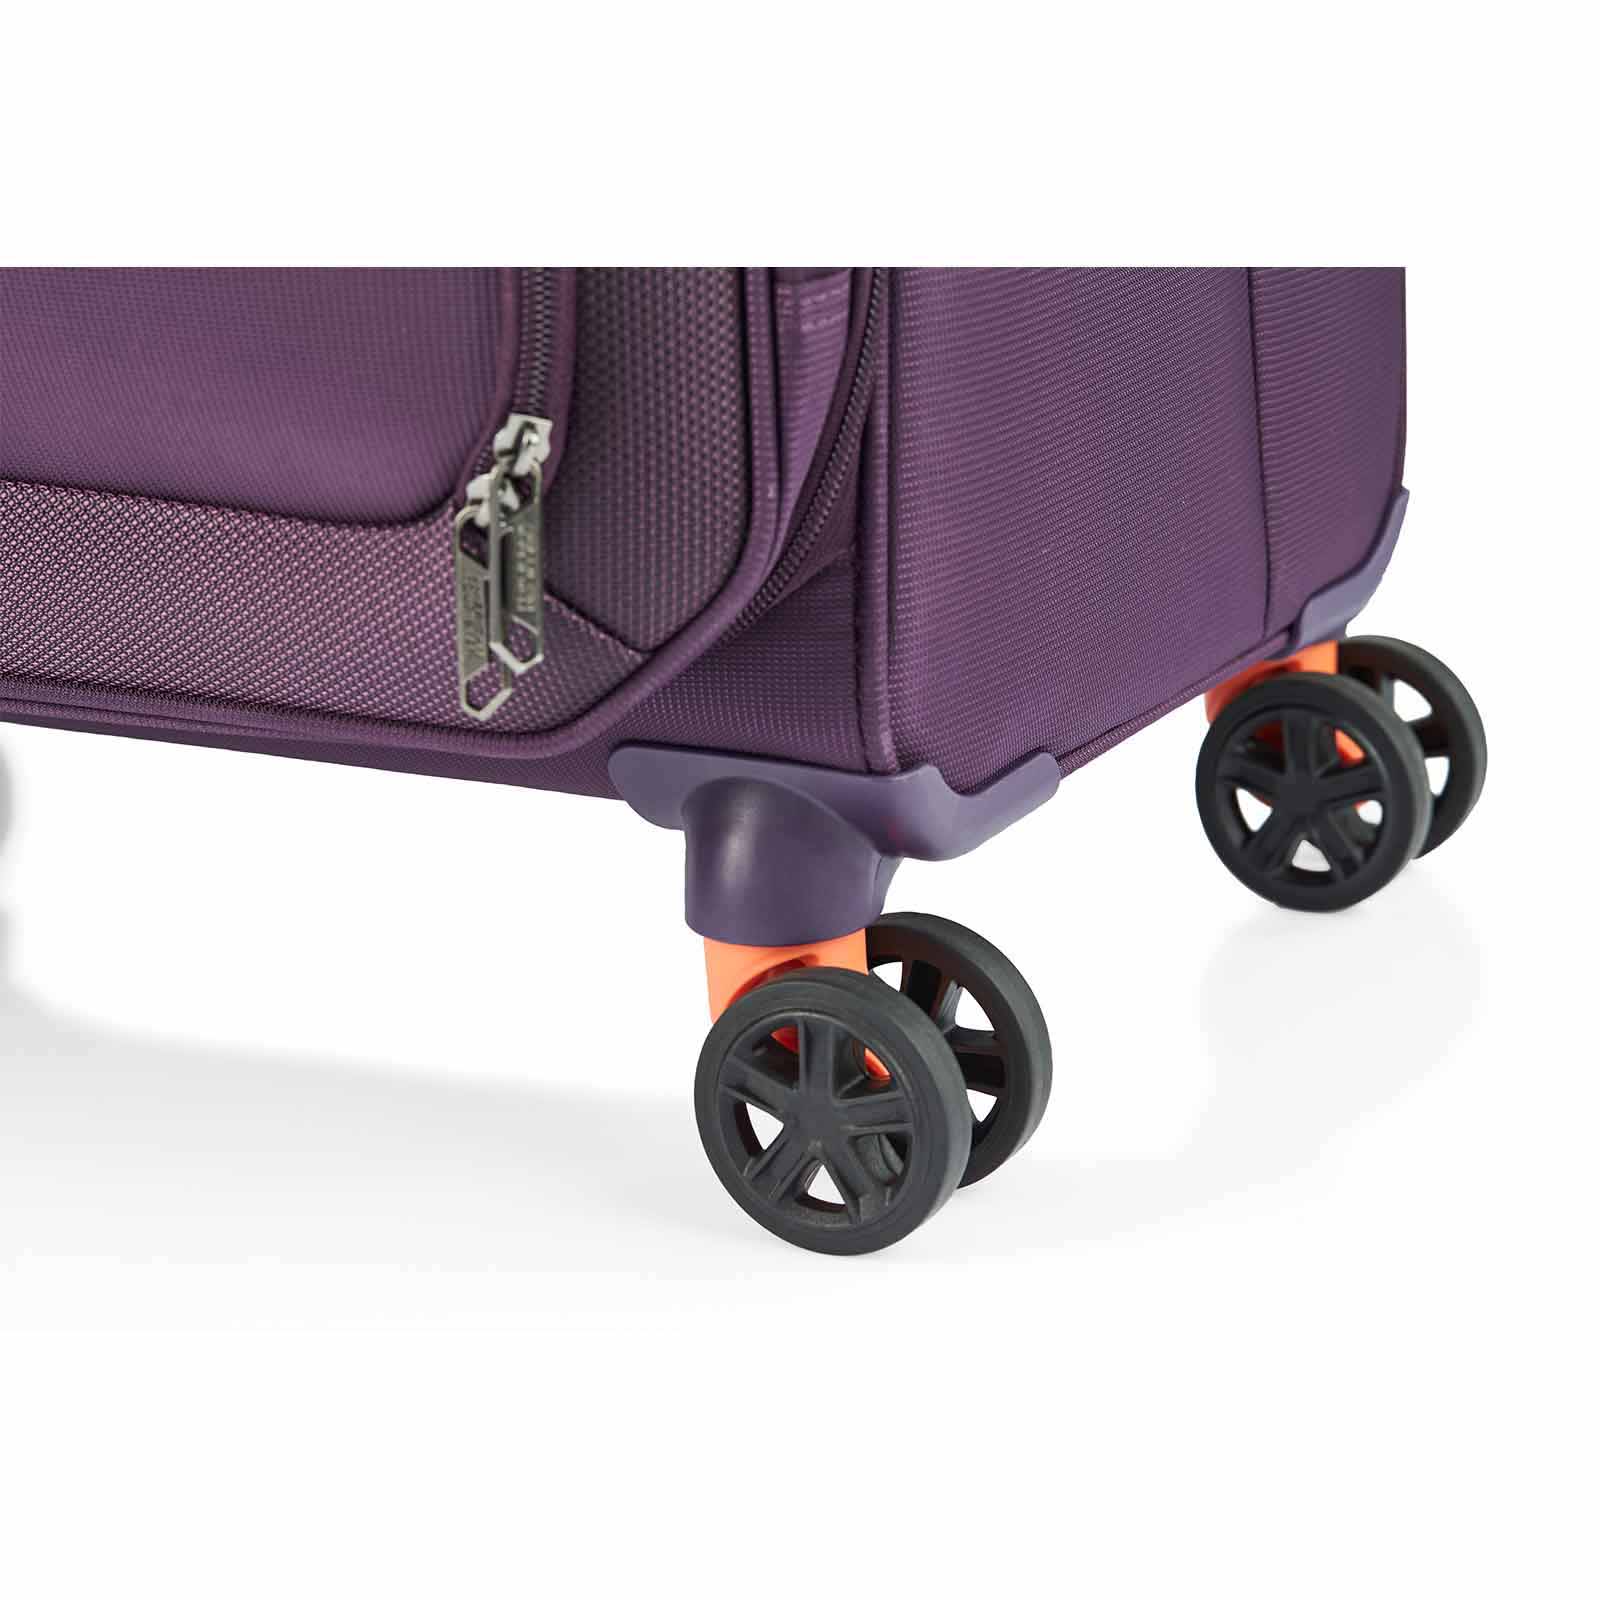 American Tourister Applite 4 Eco 82cm Suitcase Purple-Orange